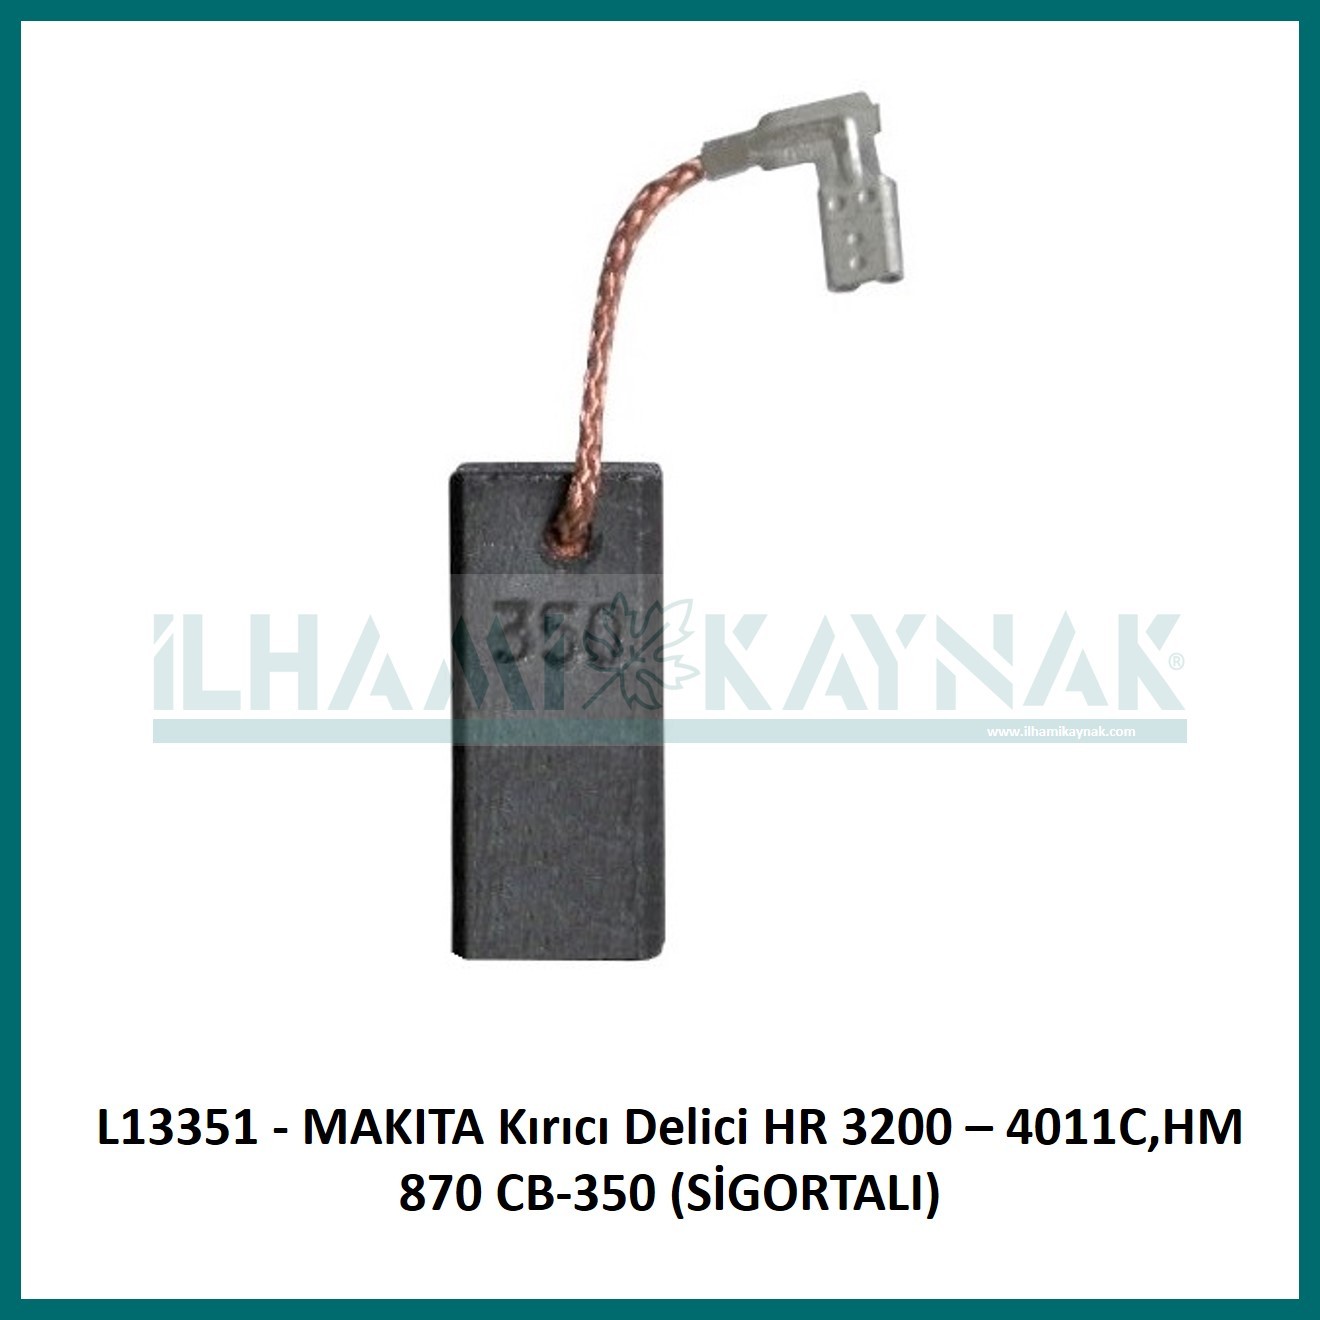 L13351 - MAKITA Kırıcı Delici HR 3200 – 4011C,HM 870 CB-350 (SİGORTALI) - 6.5*11.25 mm - 100 Adet